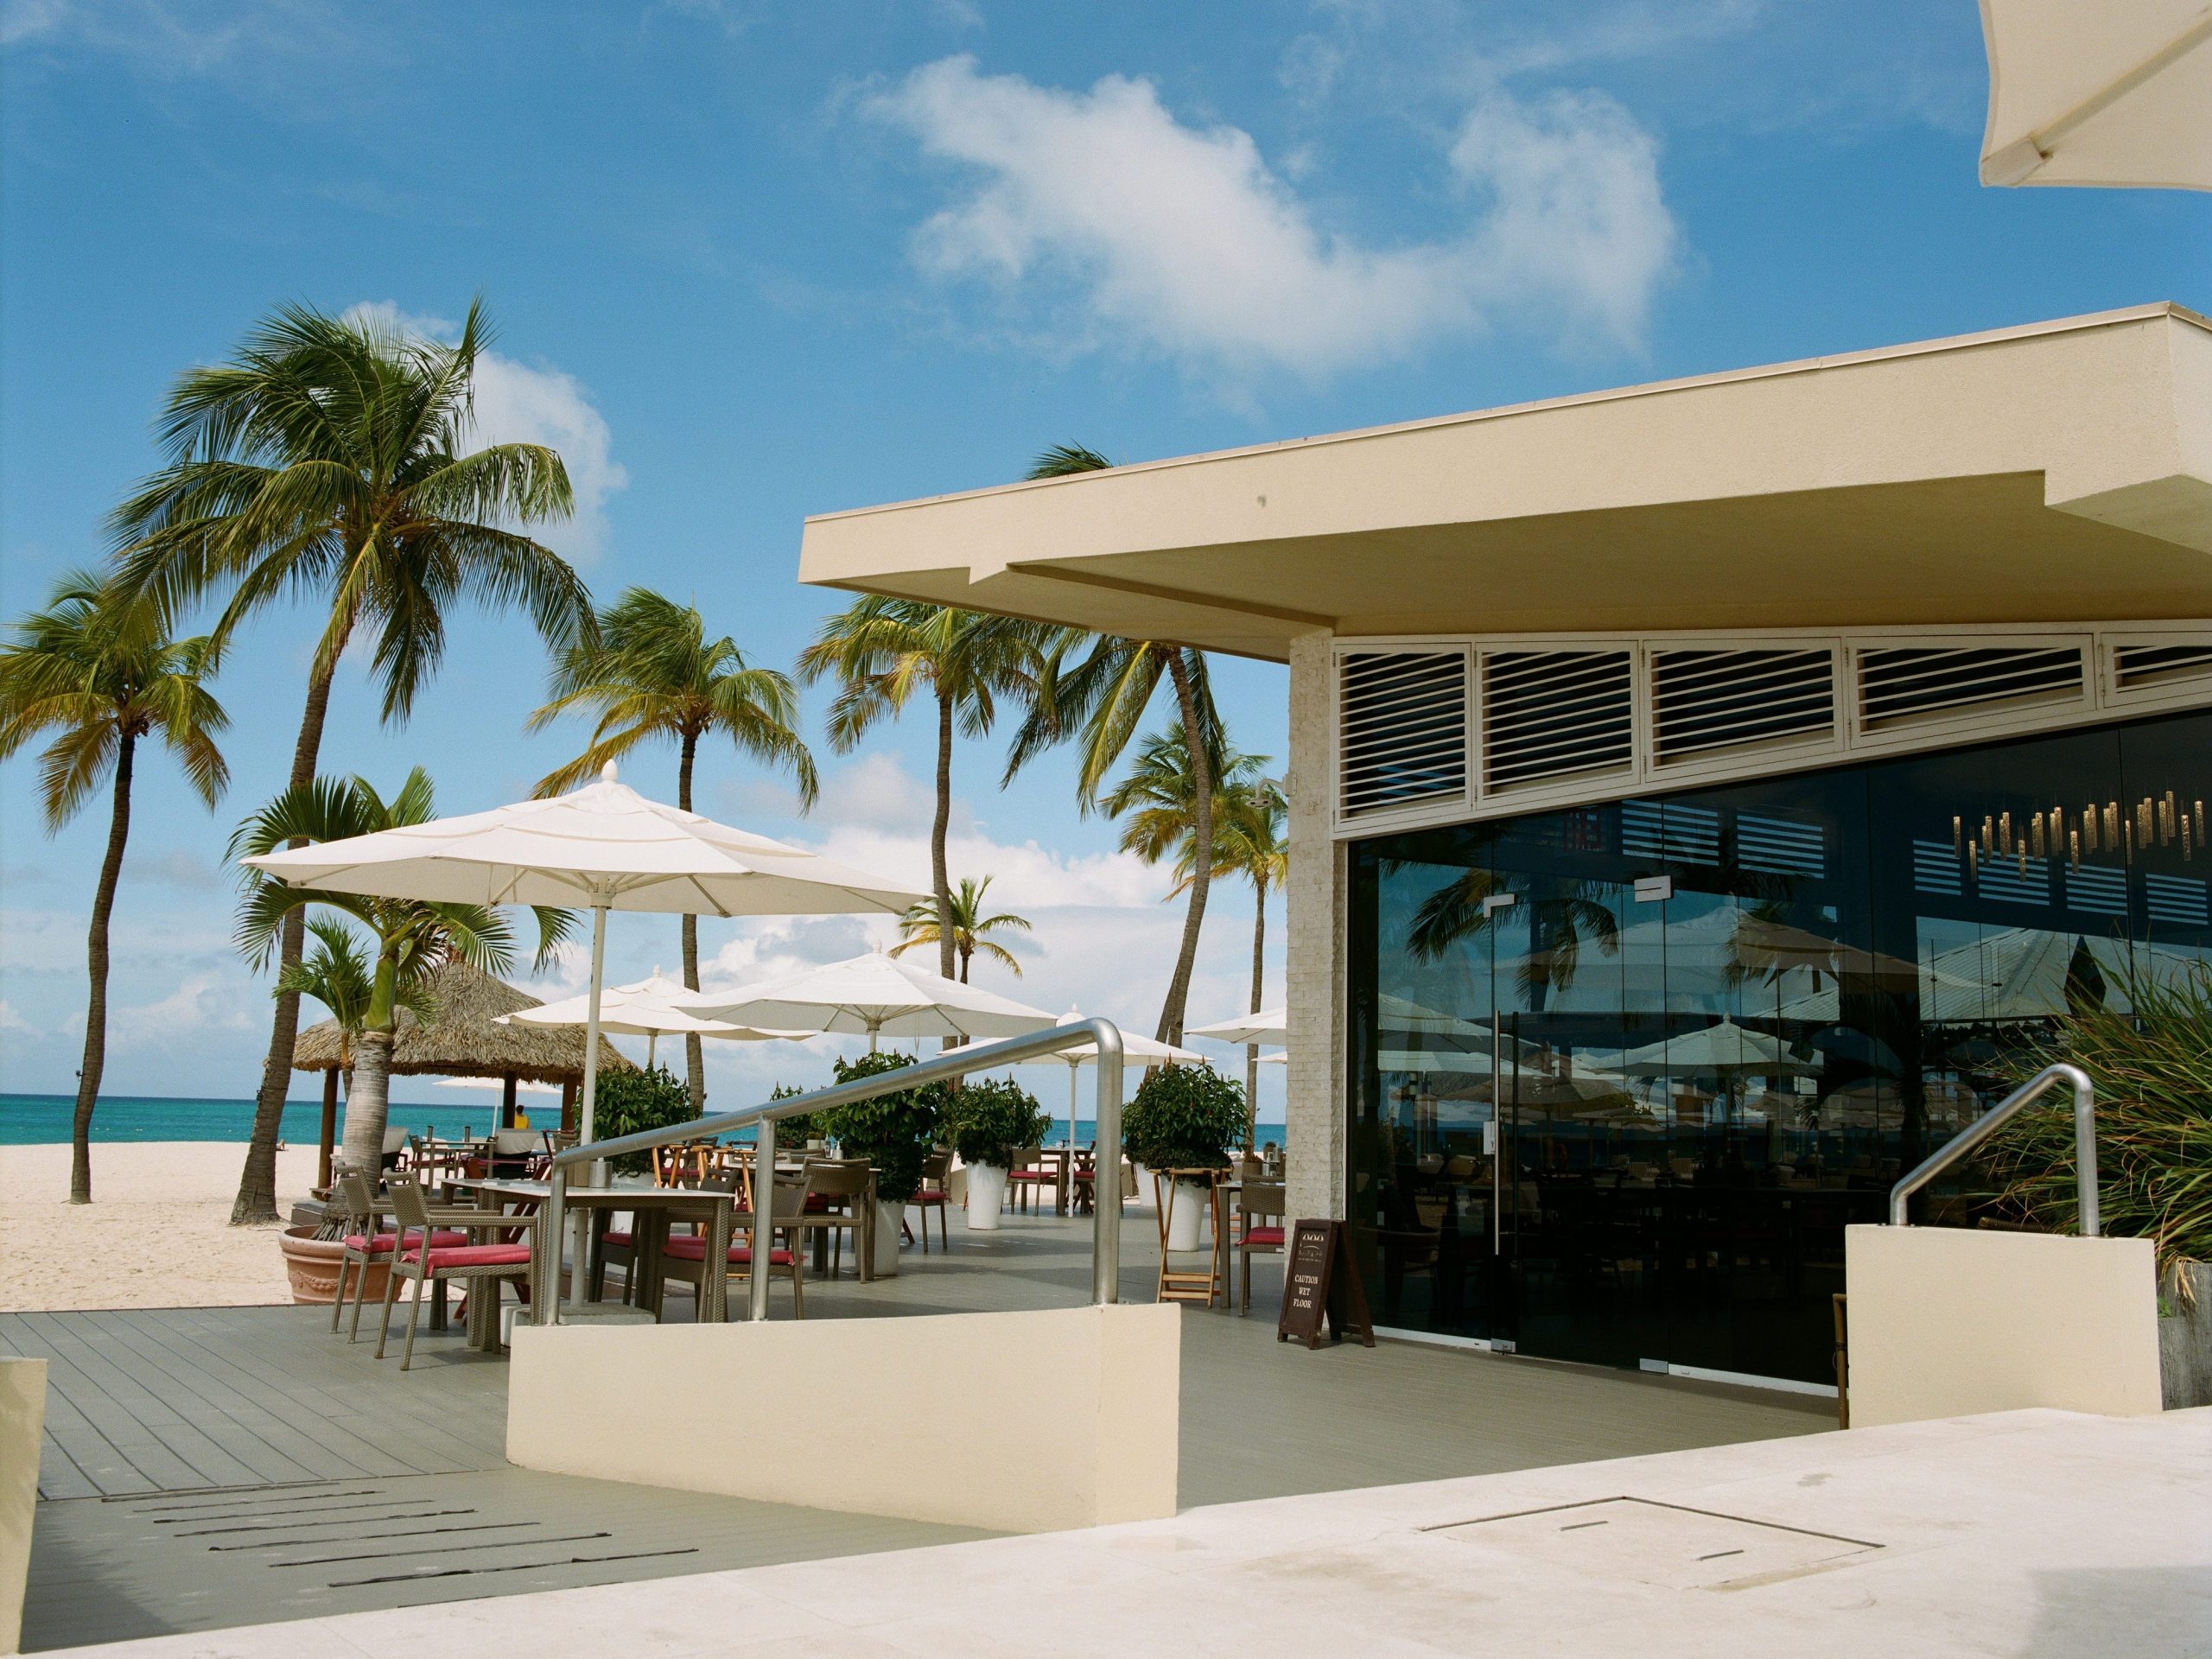 The exterior of Elements Restaurant in Aruba.